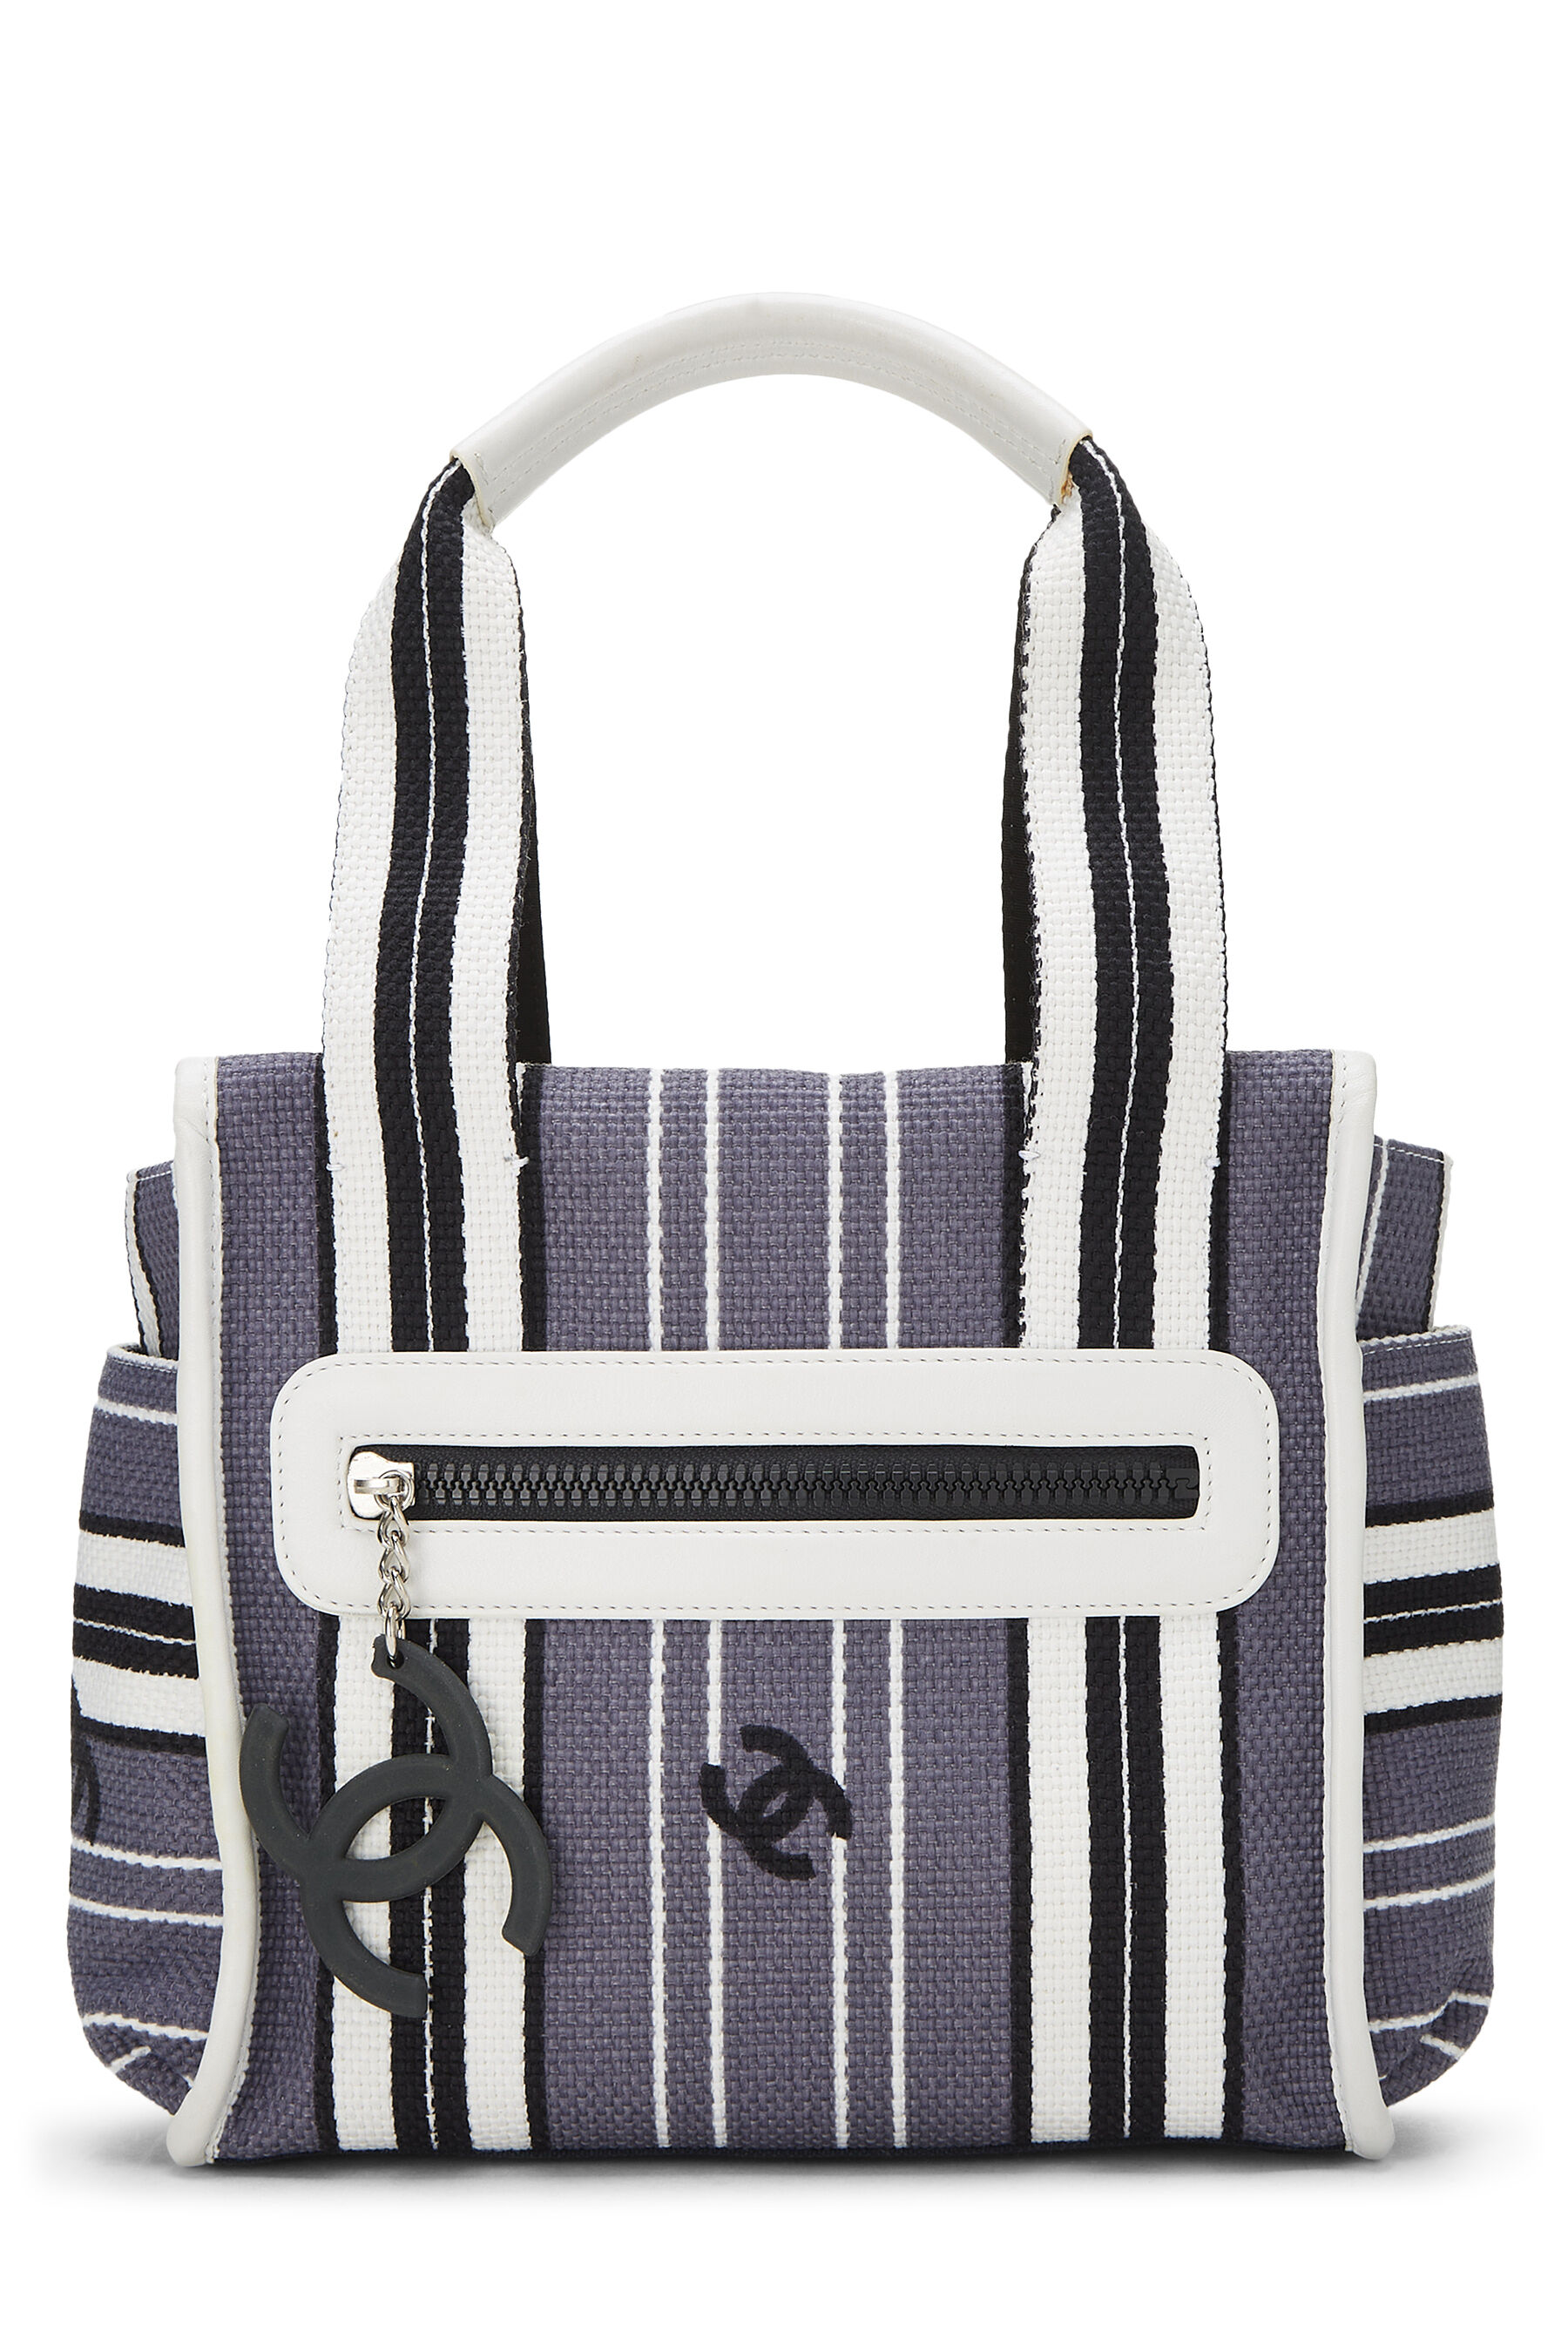 White & Navy Striped Canvas Handbag Small